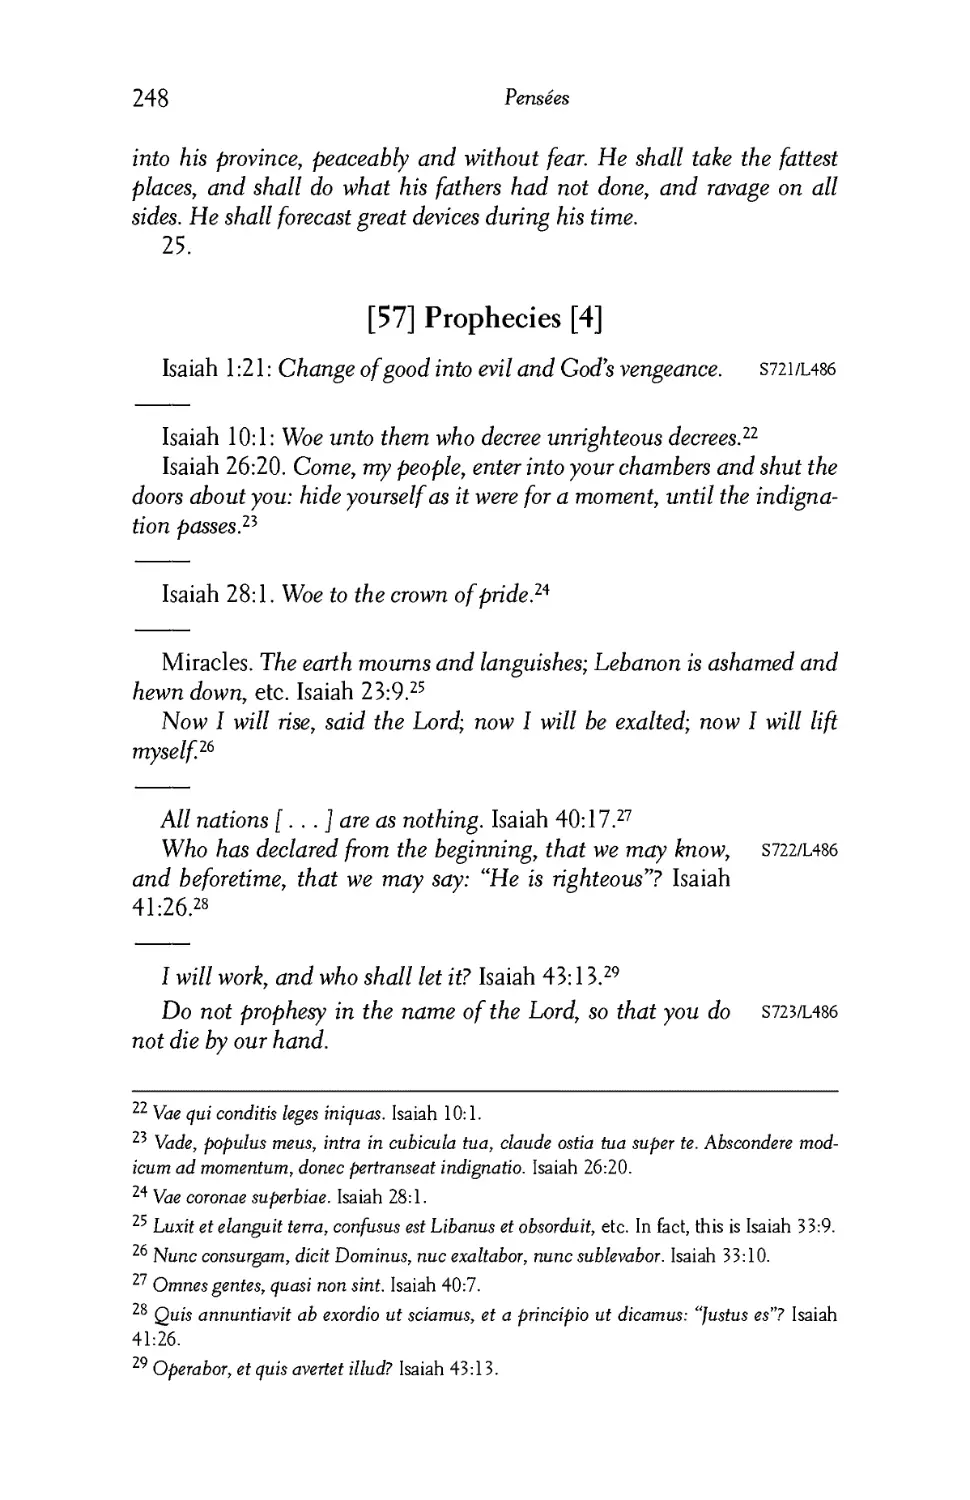 57. Prophecies 4